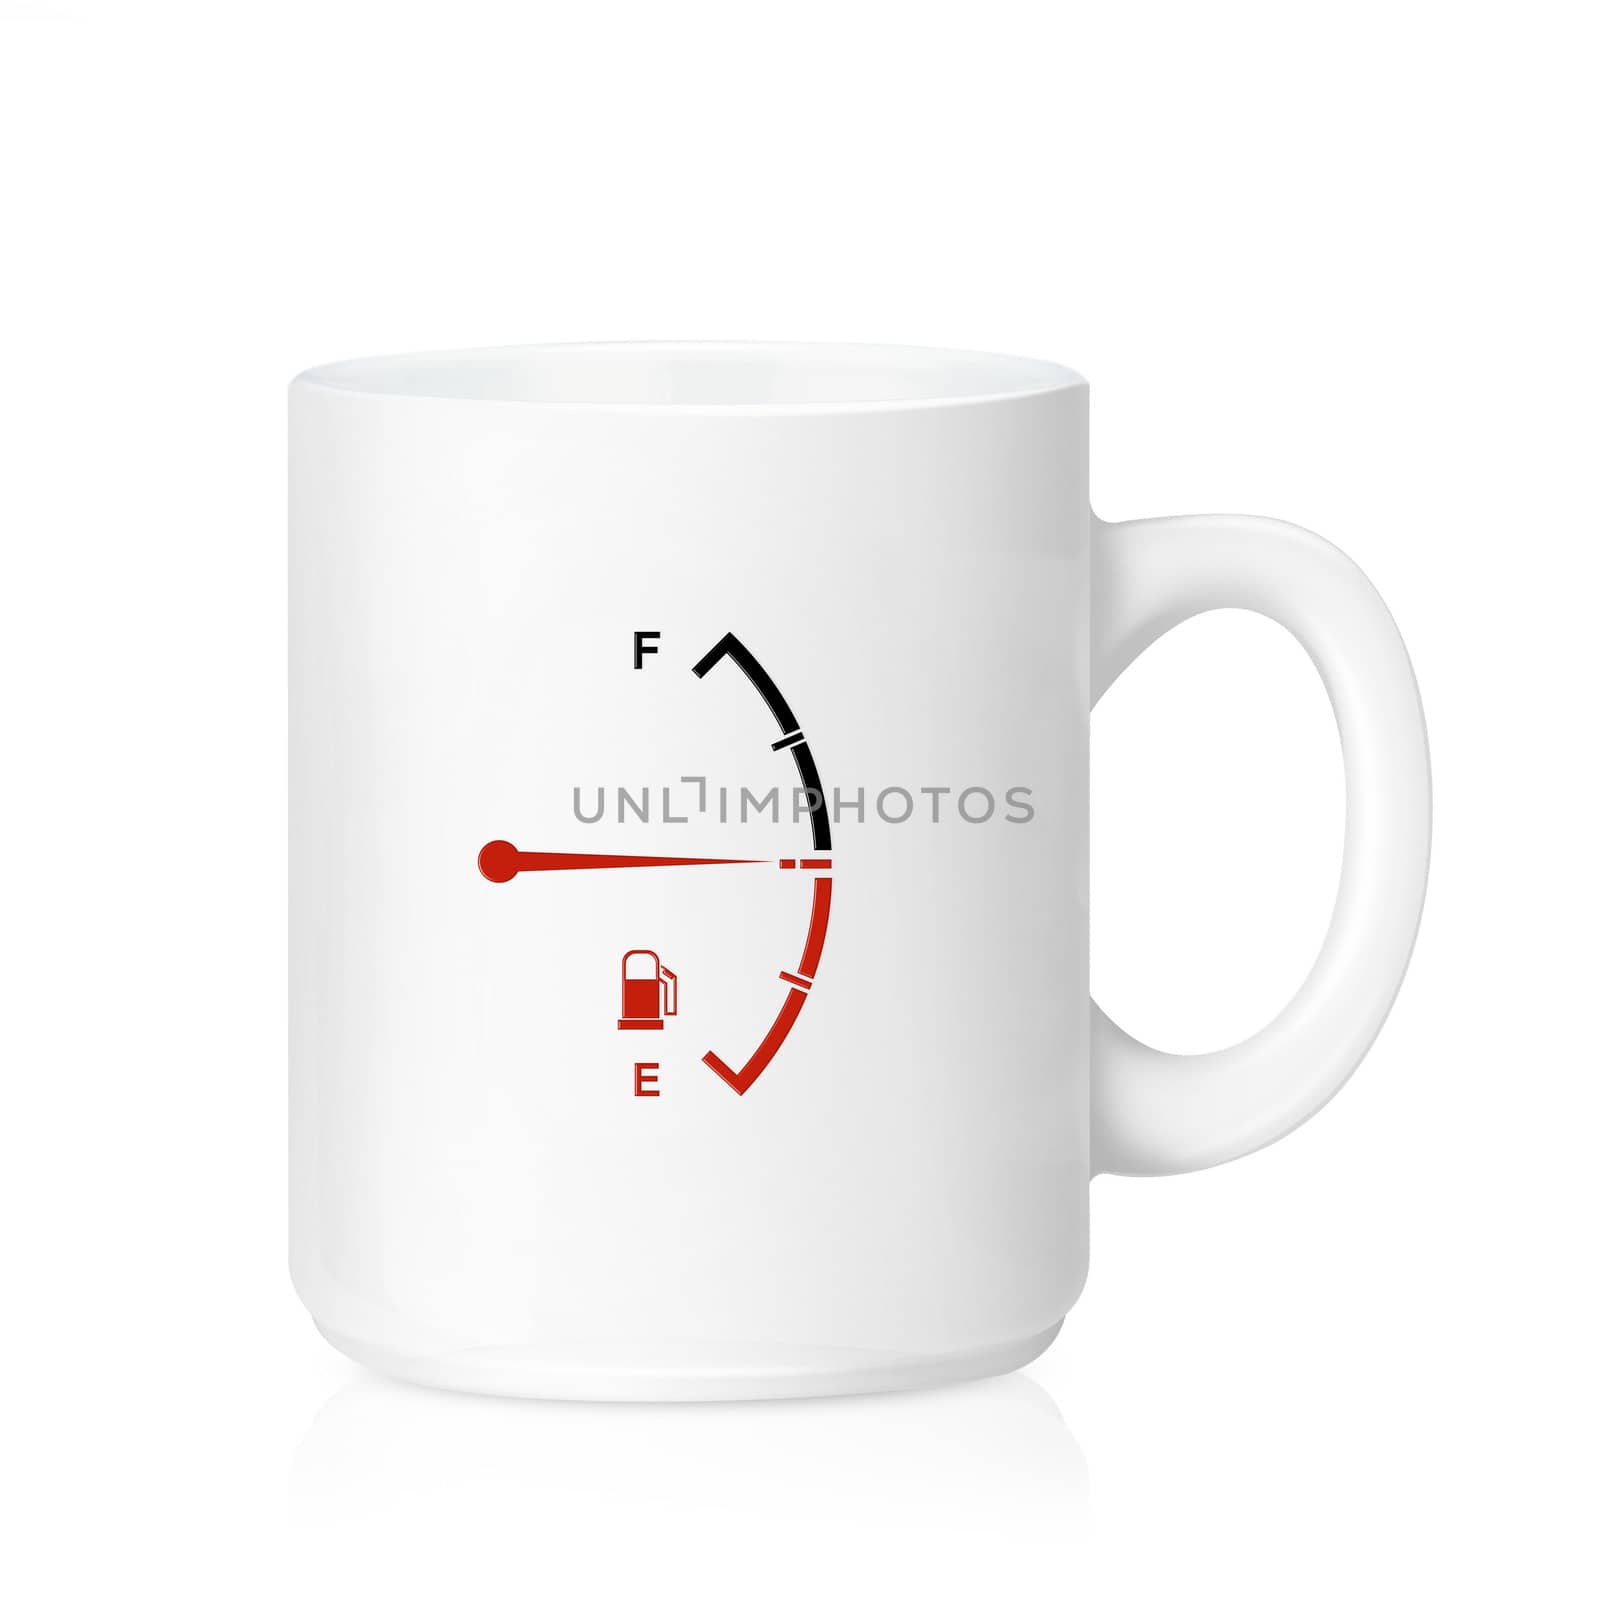 White ceramic mug by designsstock